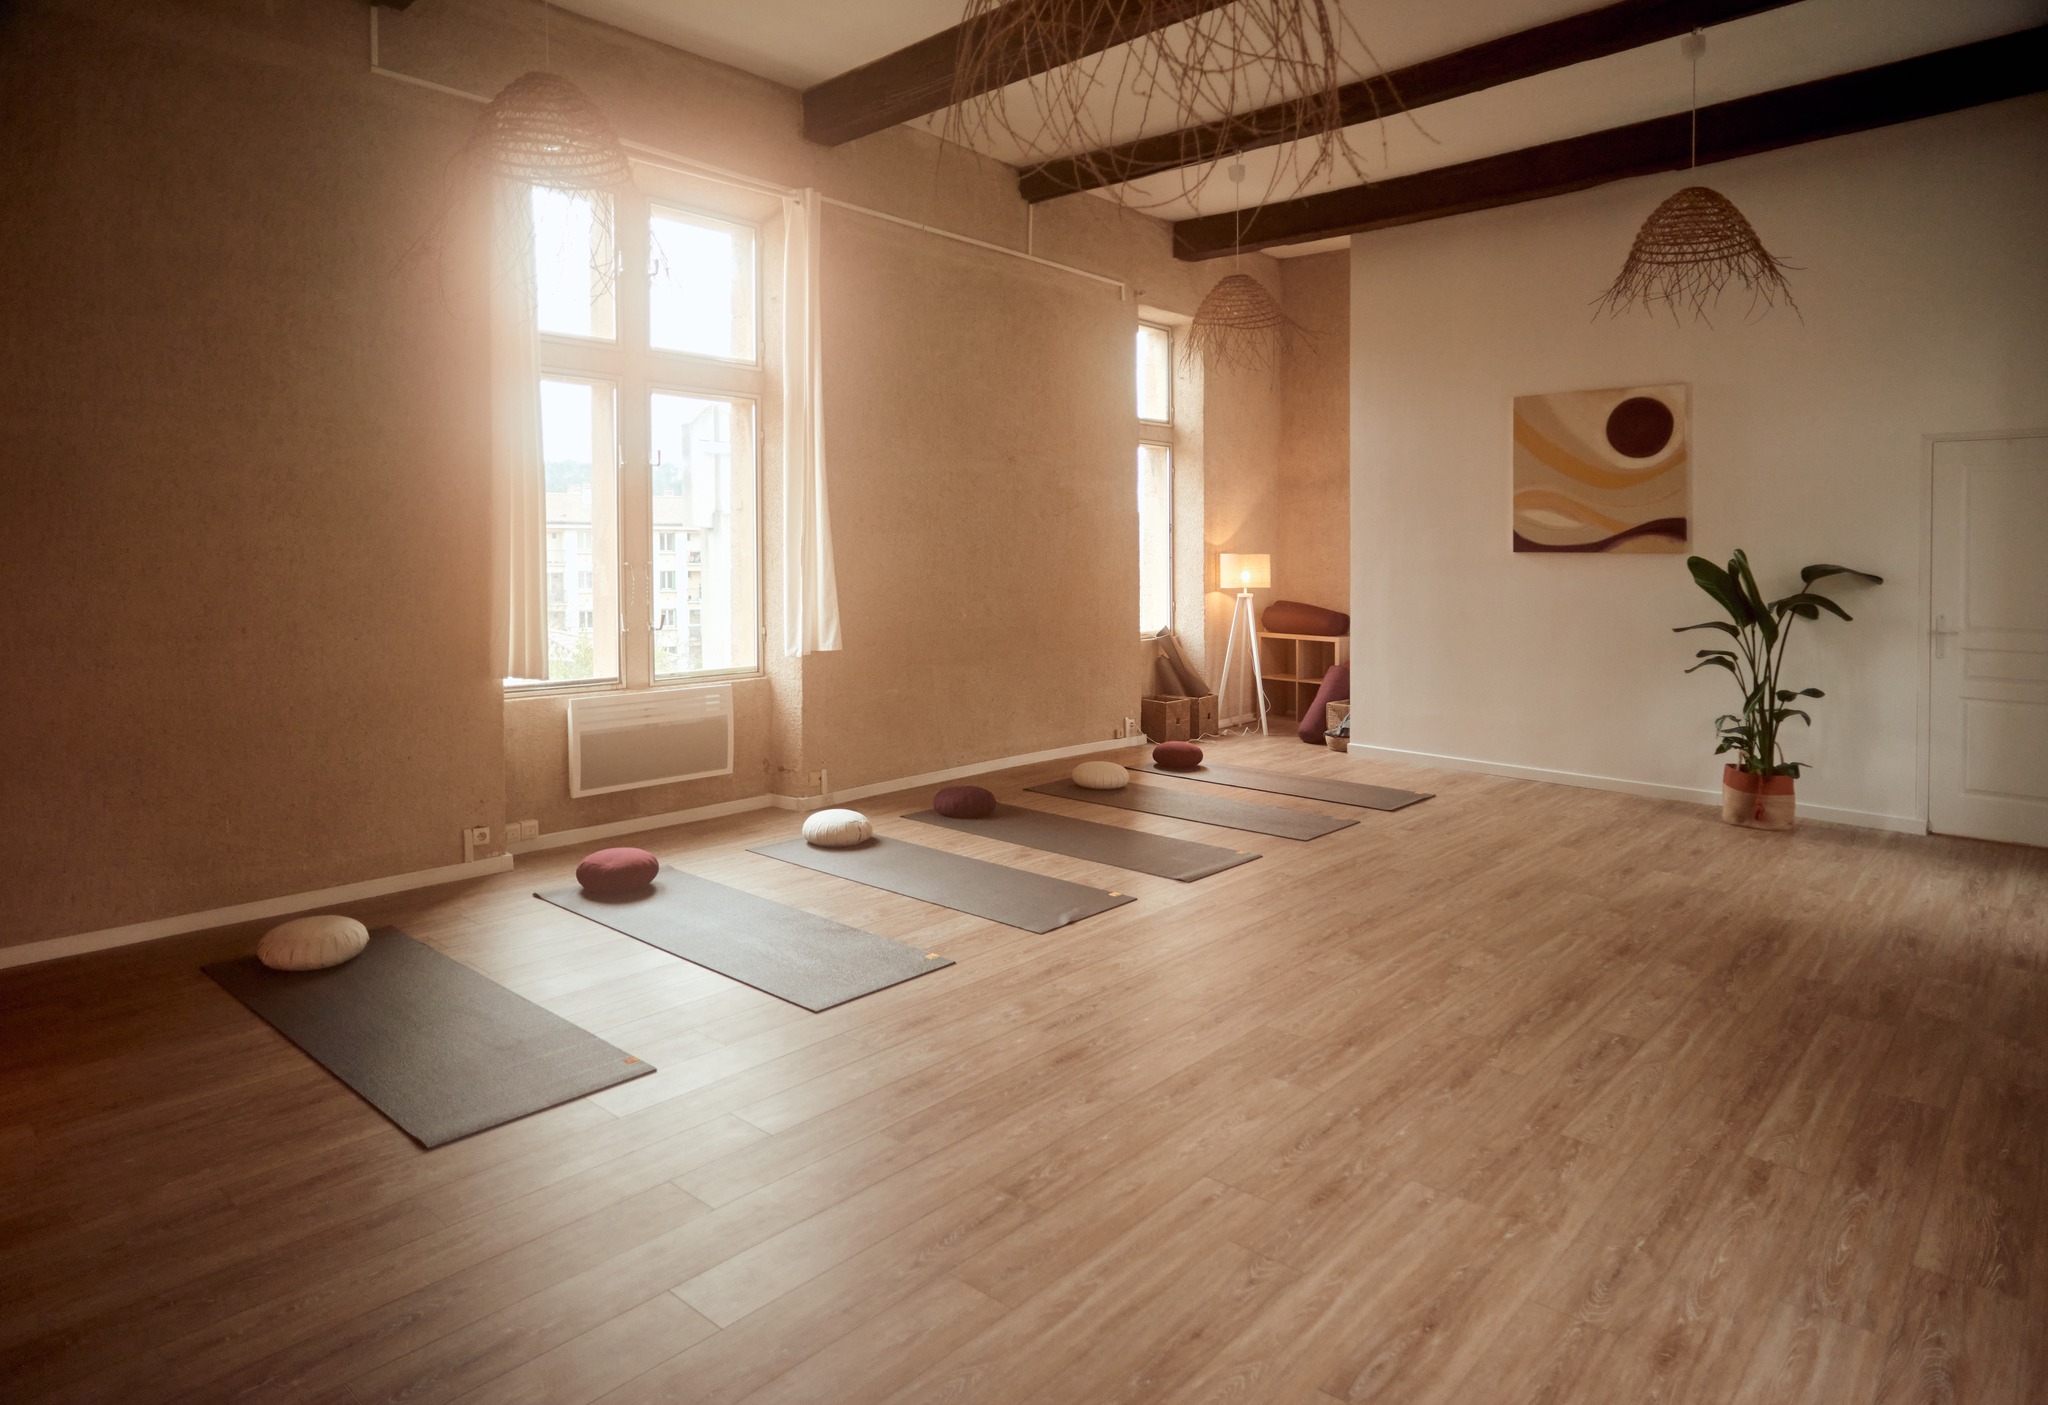 My beautiful new yoga studio!